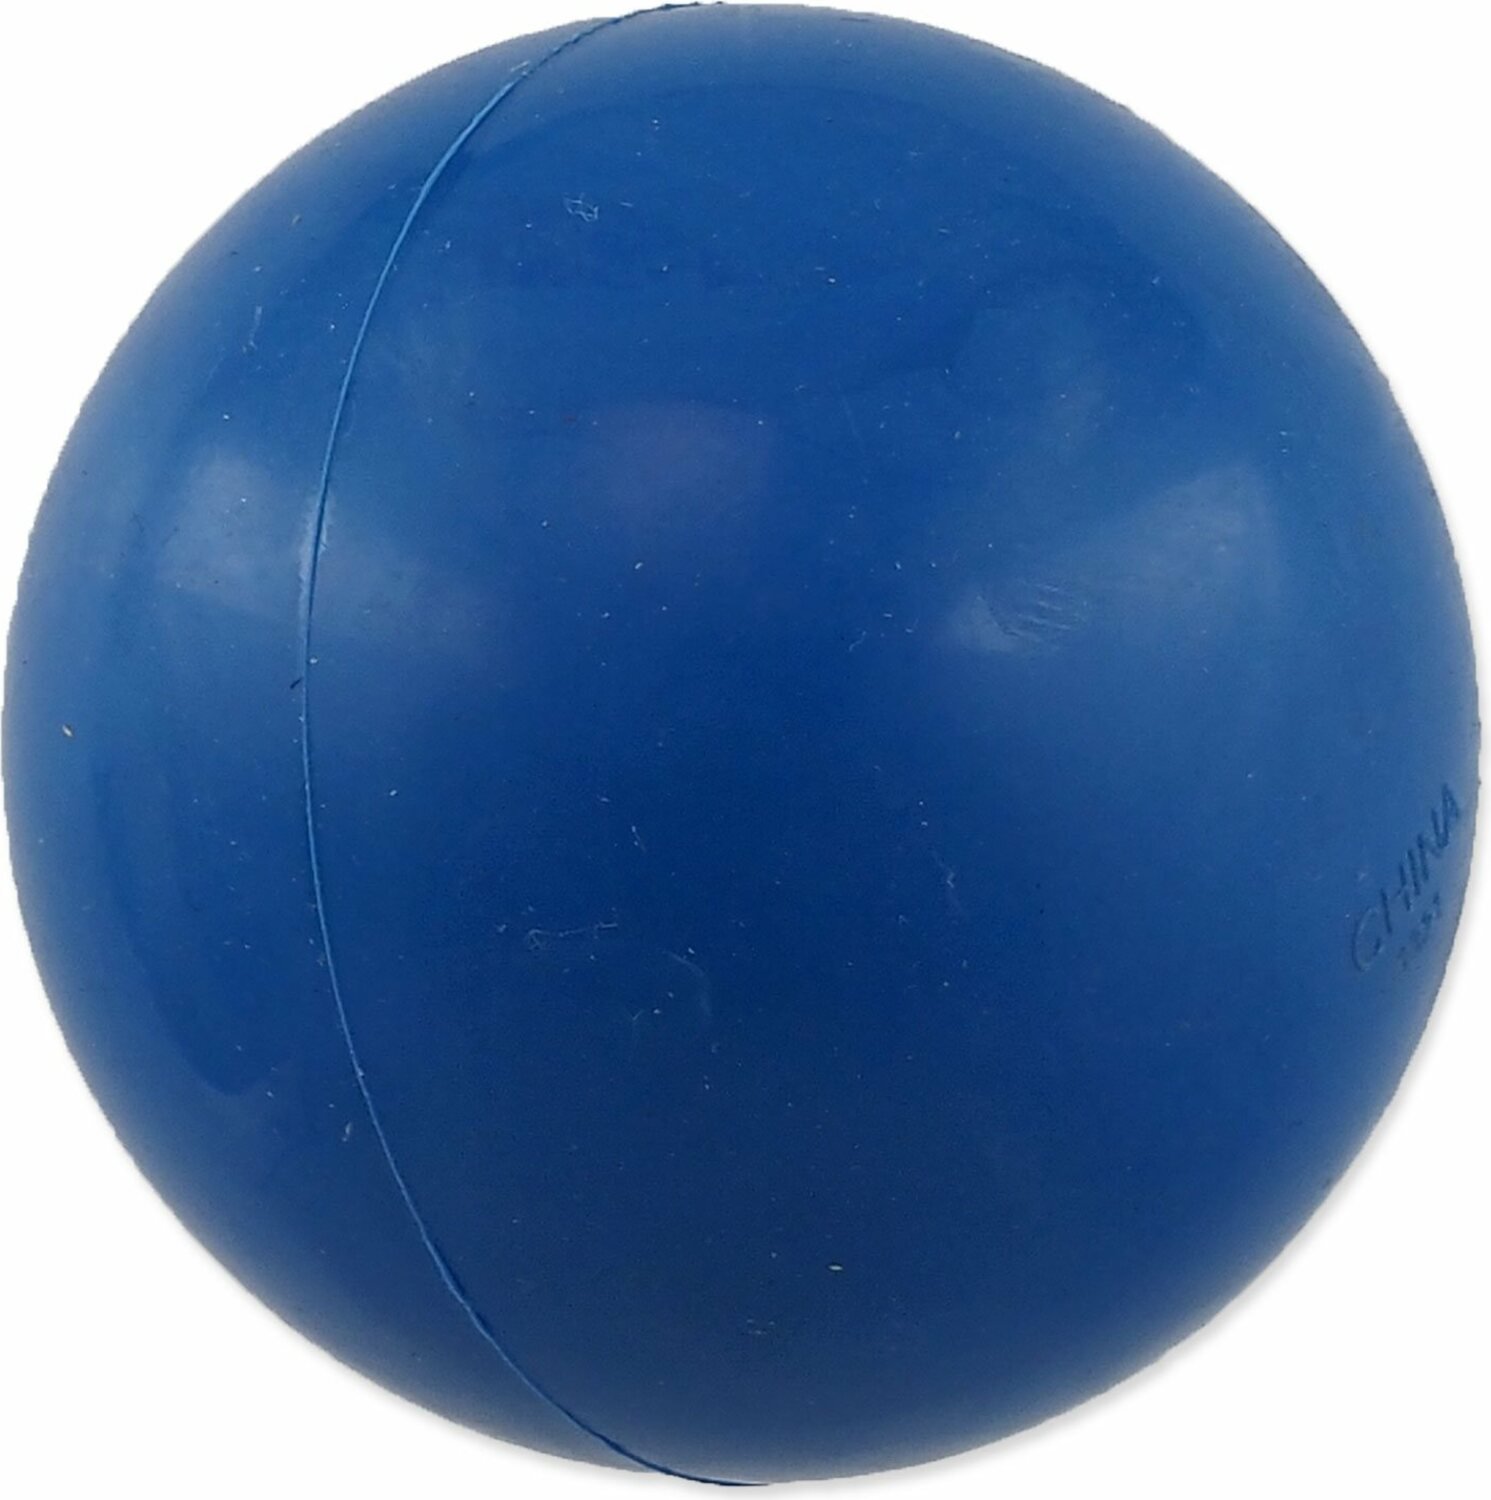 Hračka Dog Fantasy míč tvrdý modrý 6cm